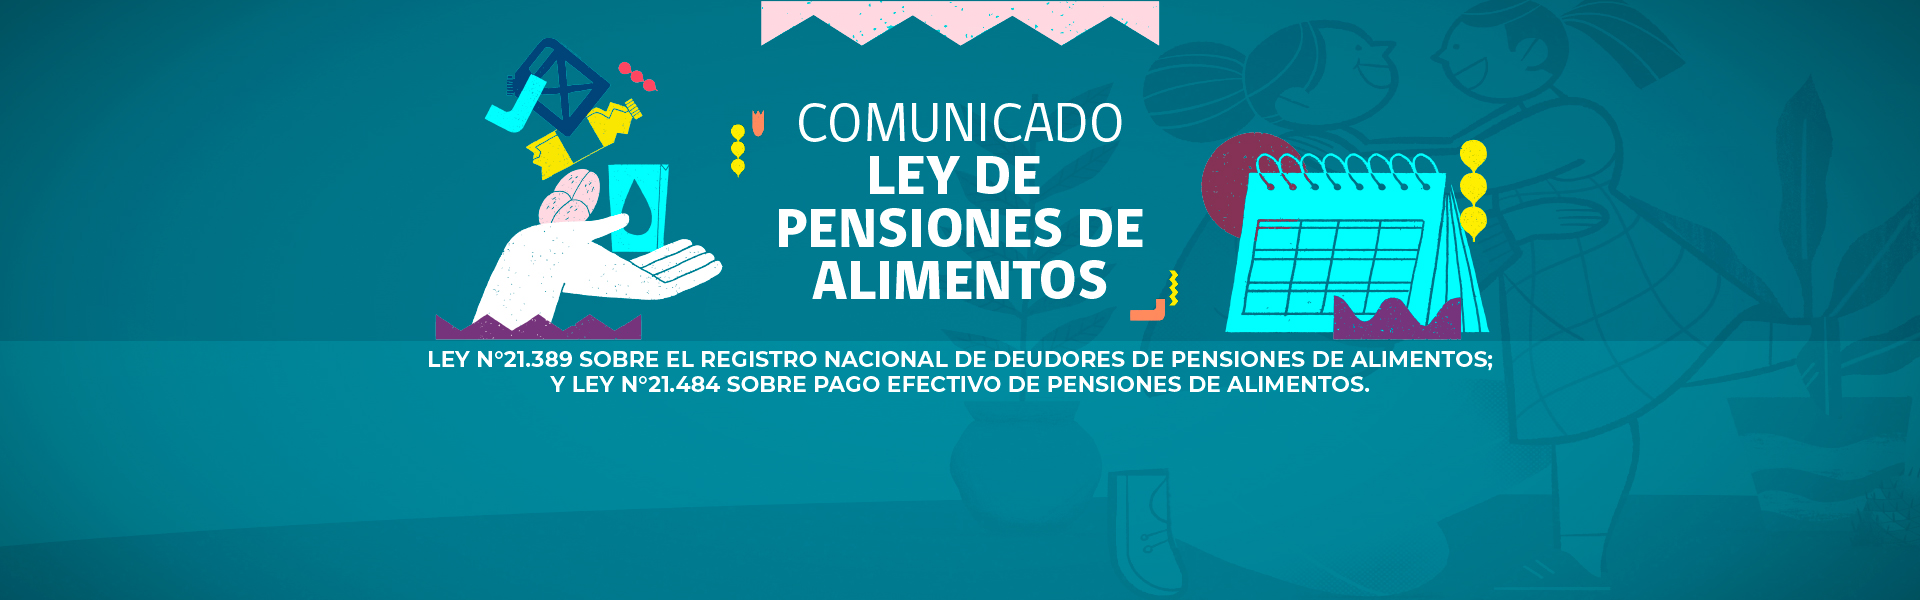 https://www.capual.cl/noticias/detalle/ley-de-pension-de-alimentos